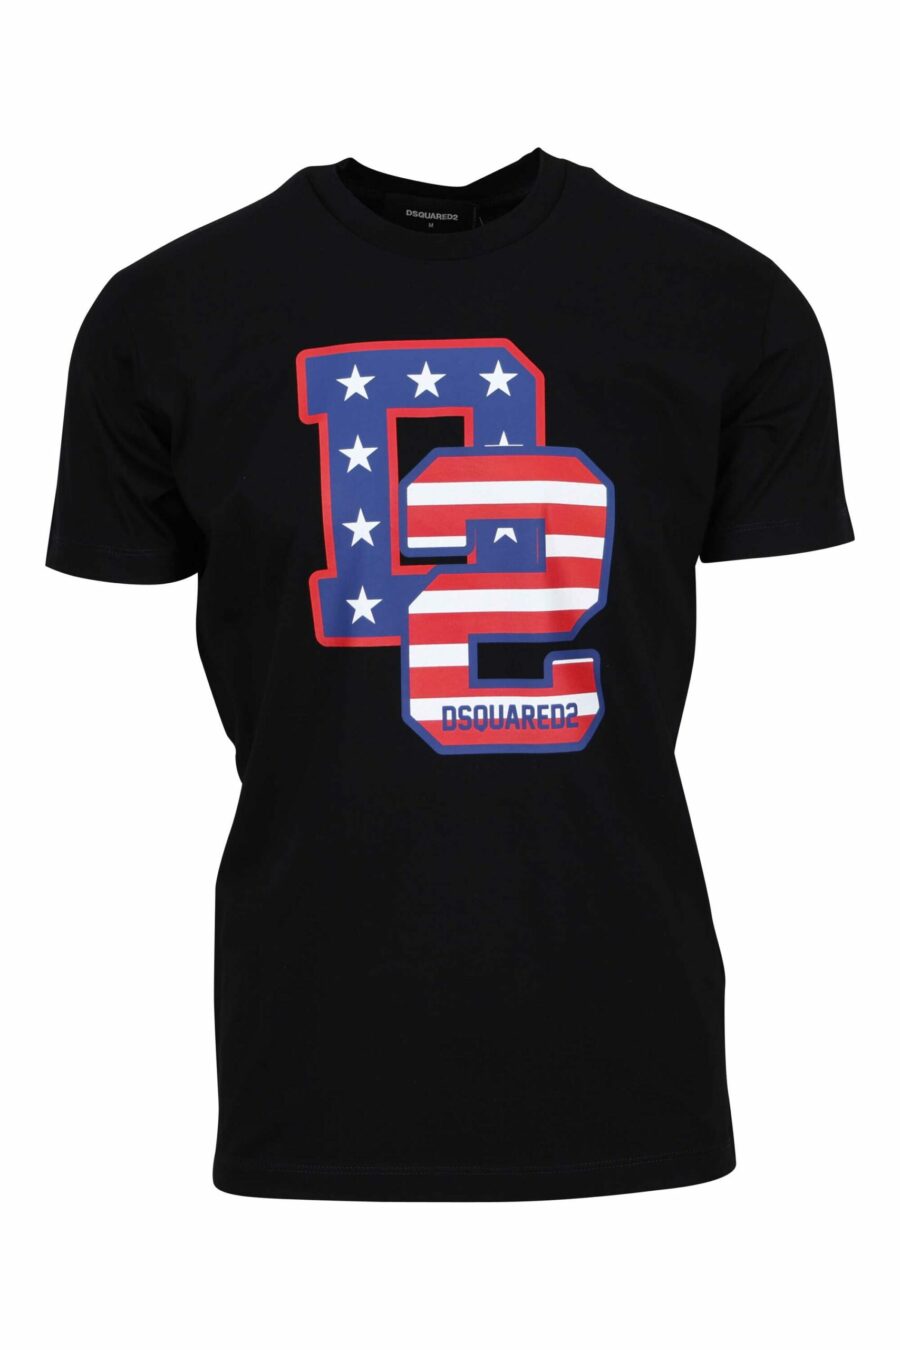 Schwarzes T-Shirt mit maxilogo "D2"-Flagge - 8054148332518 skaliert